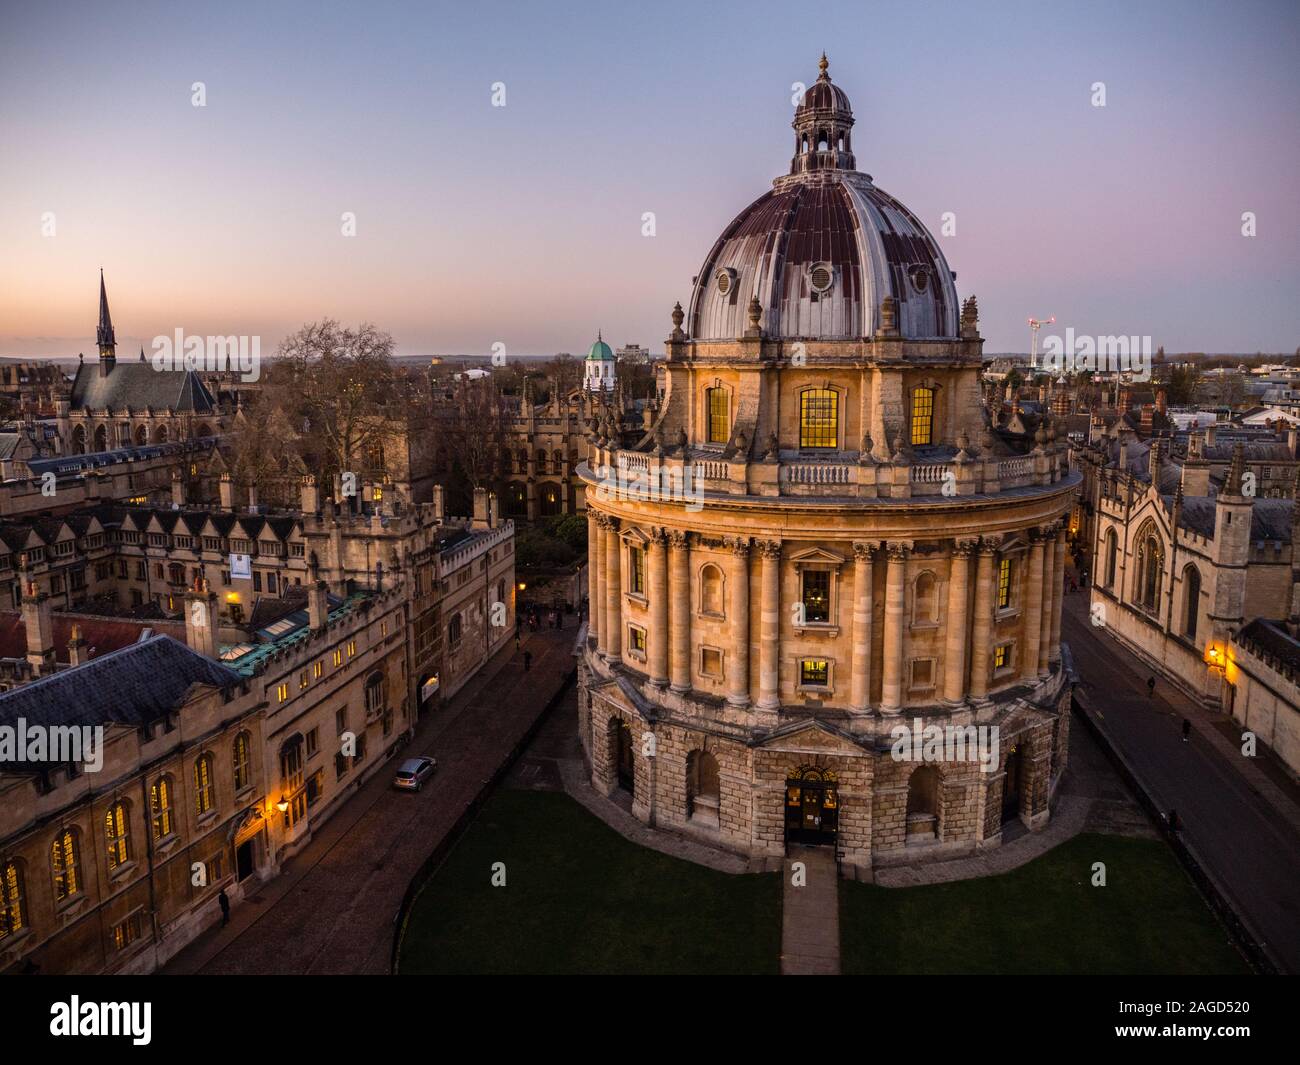 Radcliffe Square, nahe, mit, Brasenose College, Radcliffe Camera, Oxford University, Oxford, Oxfordshire, England, UK, GB. Stockfoto